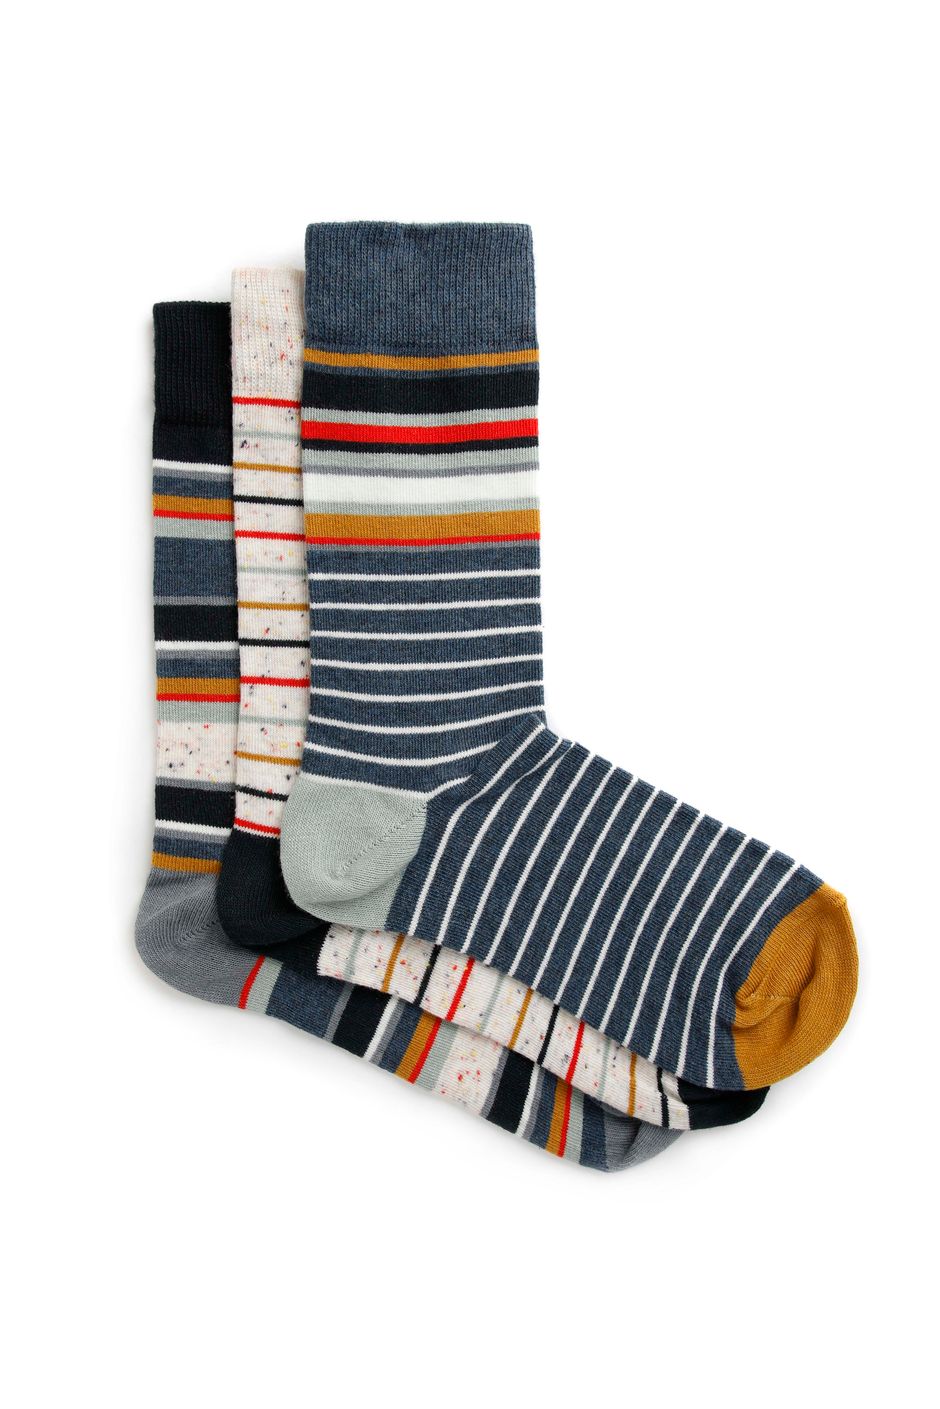 Wyatt Eco Stripe Socks Multi Pack Navy